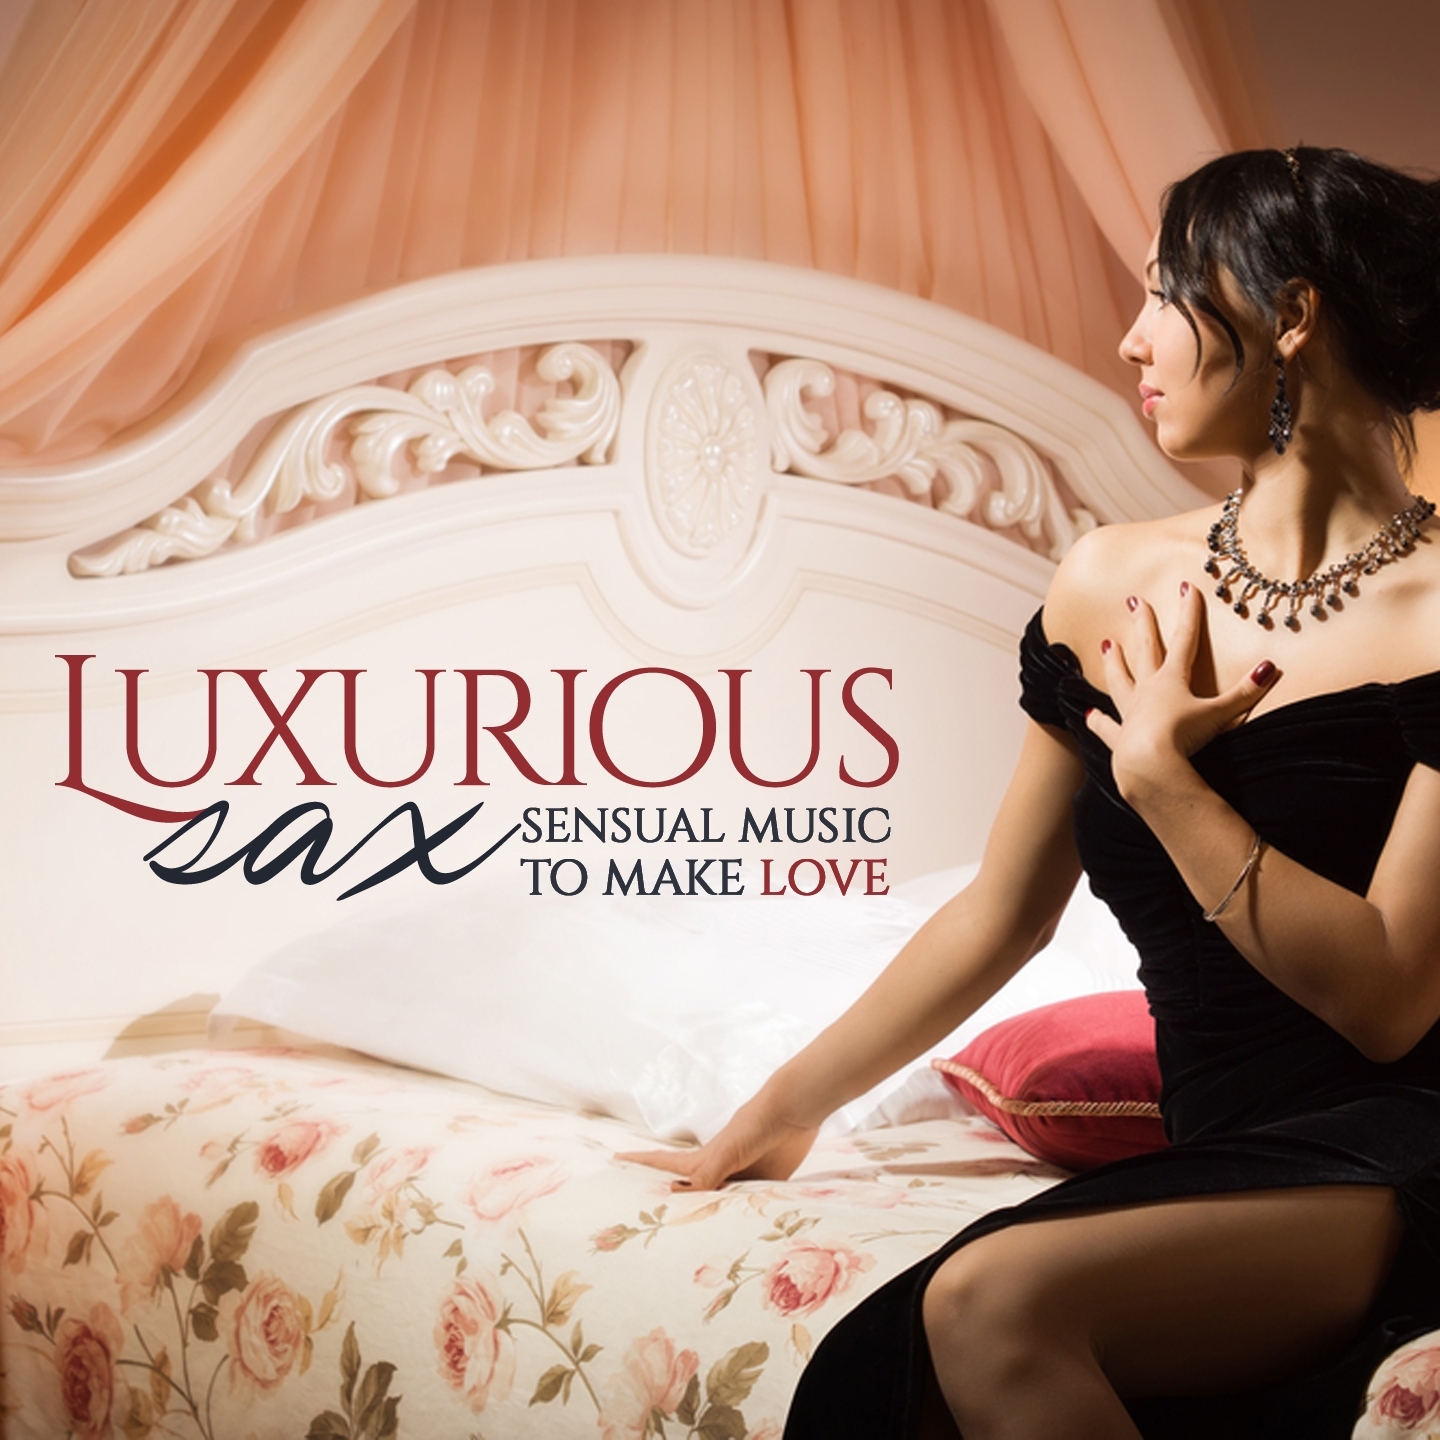 Luxurious Sax (Sensual Music to Make Love)